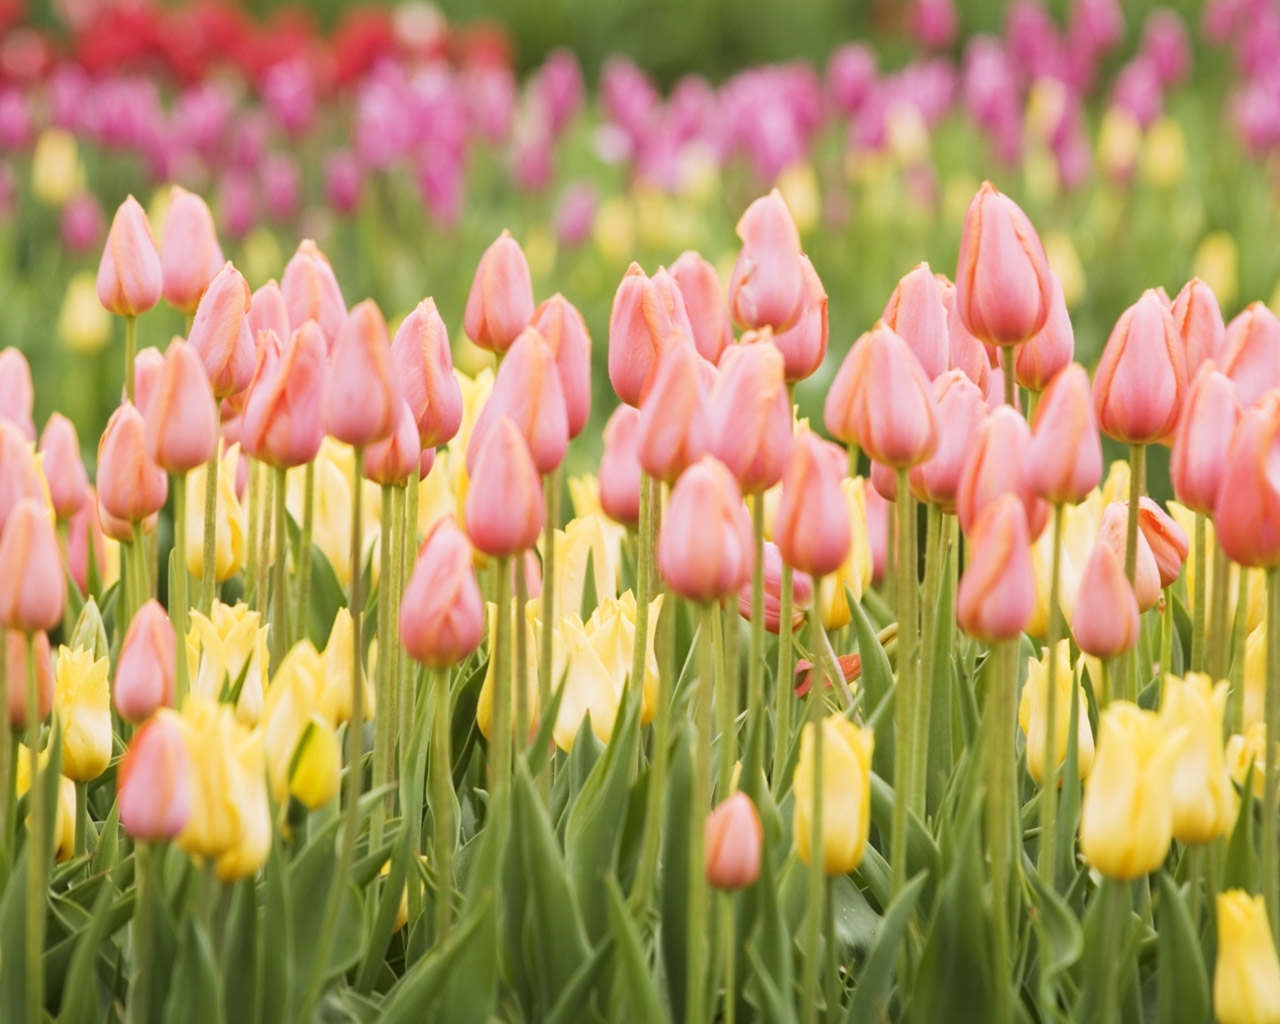 http://3.bp.blogspot.com/-isQqiaoKI3E/UElodUyYrQI/AAAAAAAAB9o/0nFDAVvZvUQ/s1600/tulips_flowers_many_buds_spring_22489_1280x1024.jpg